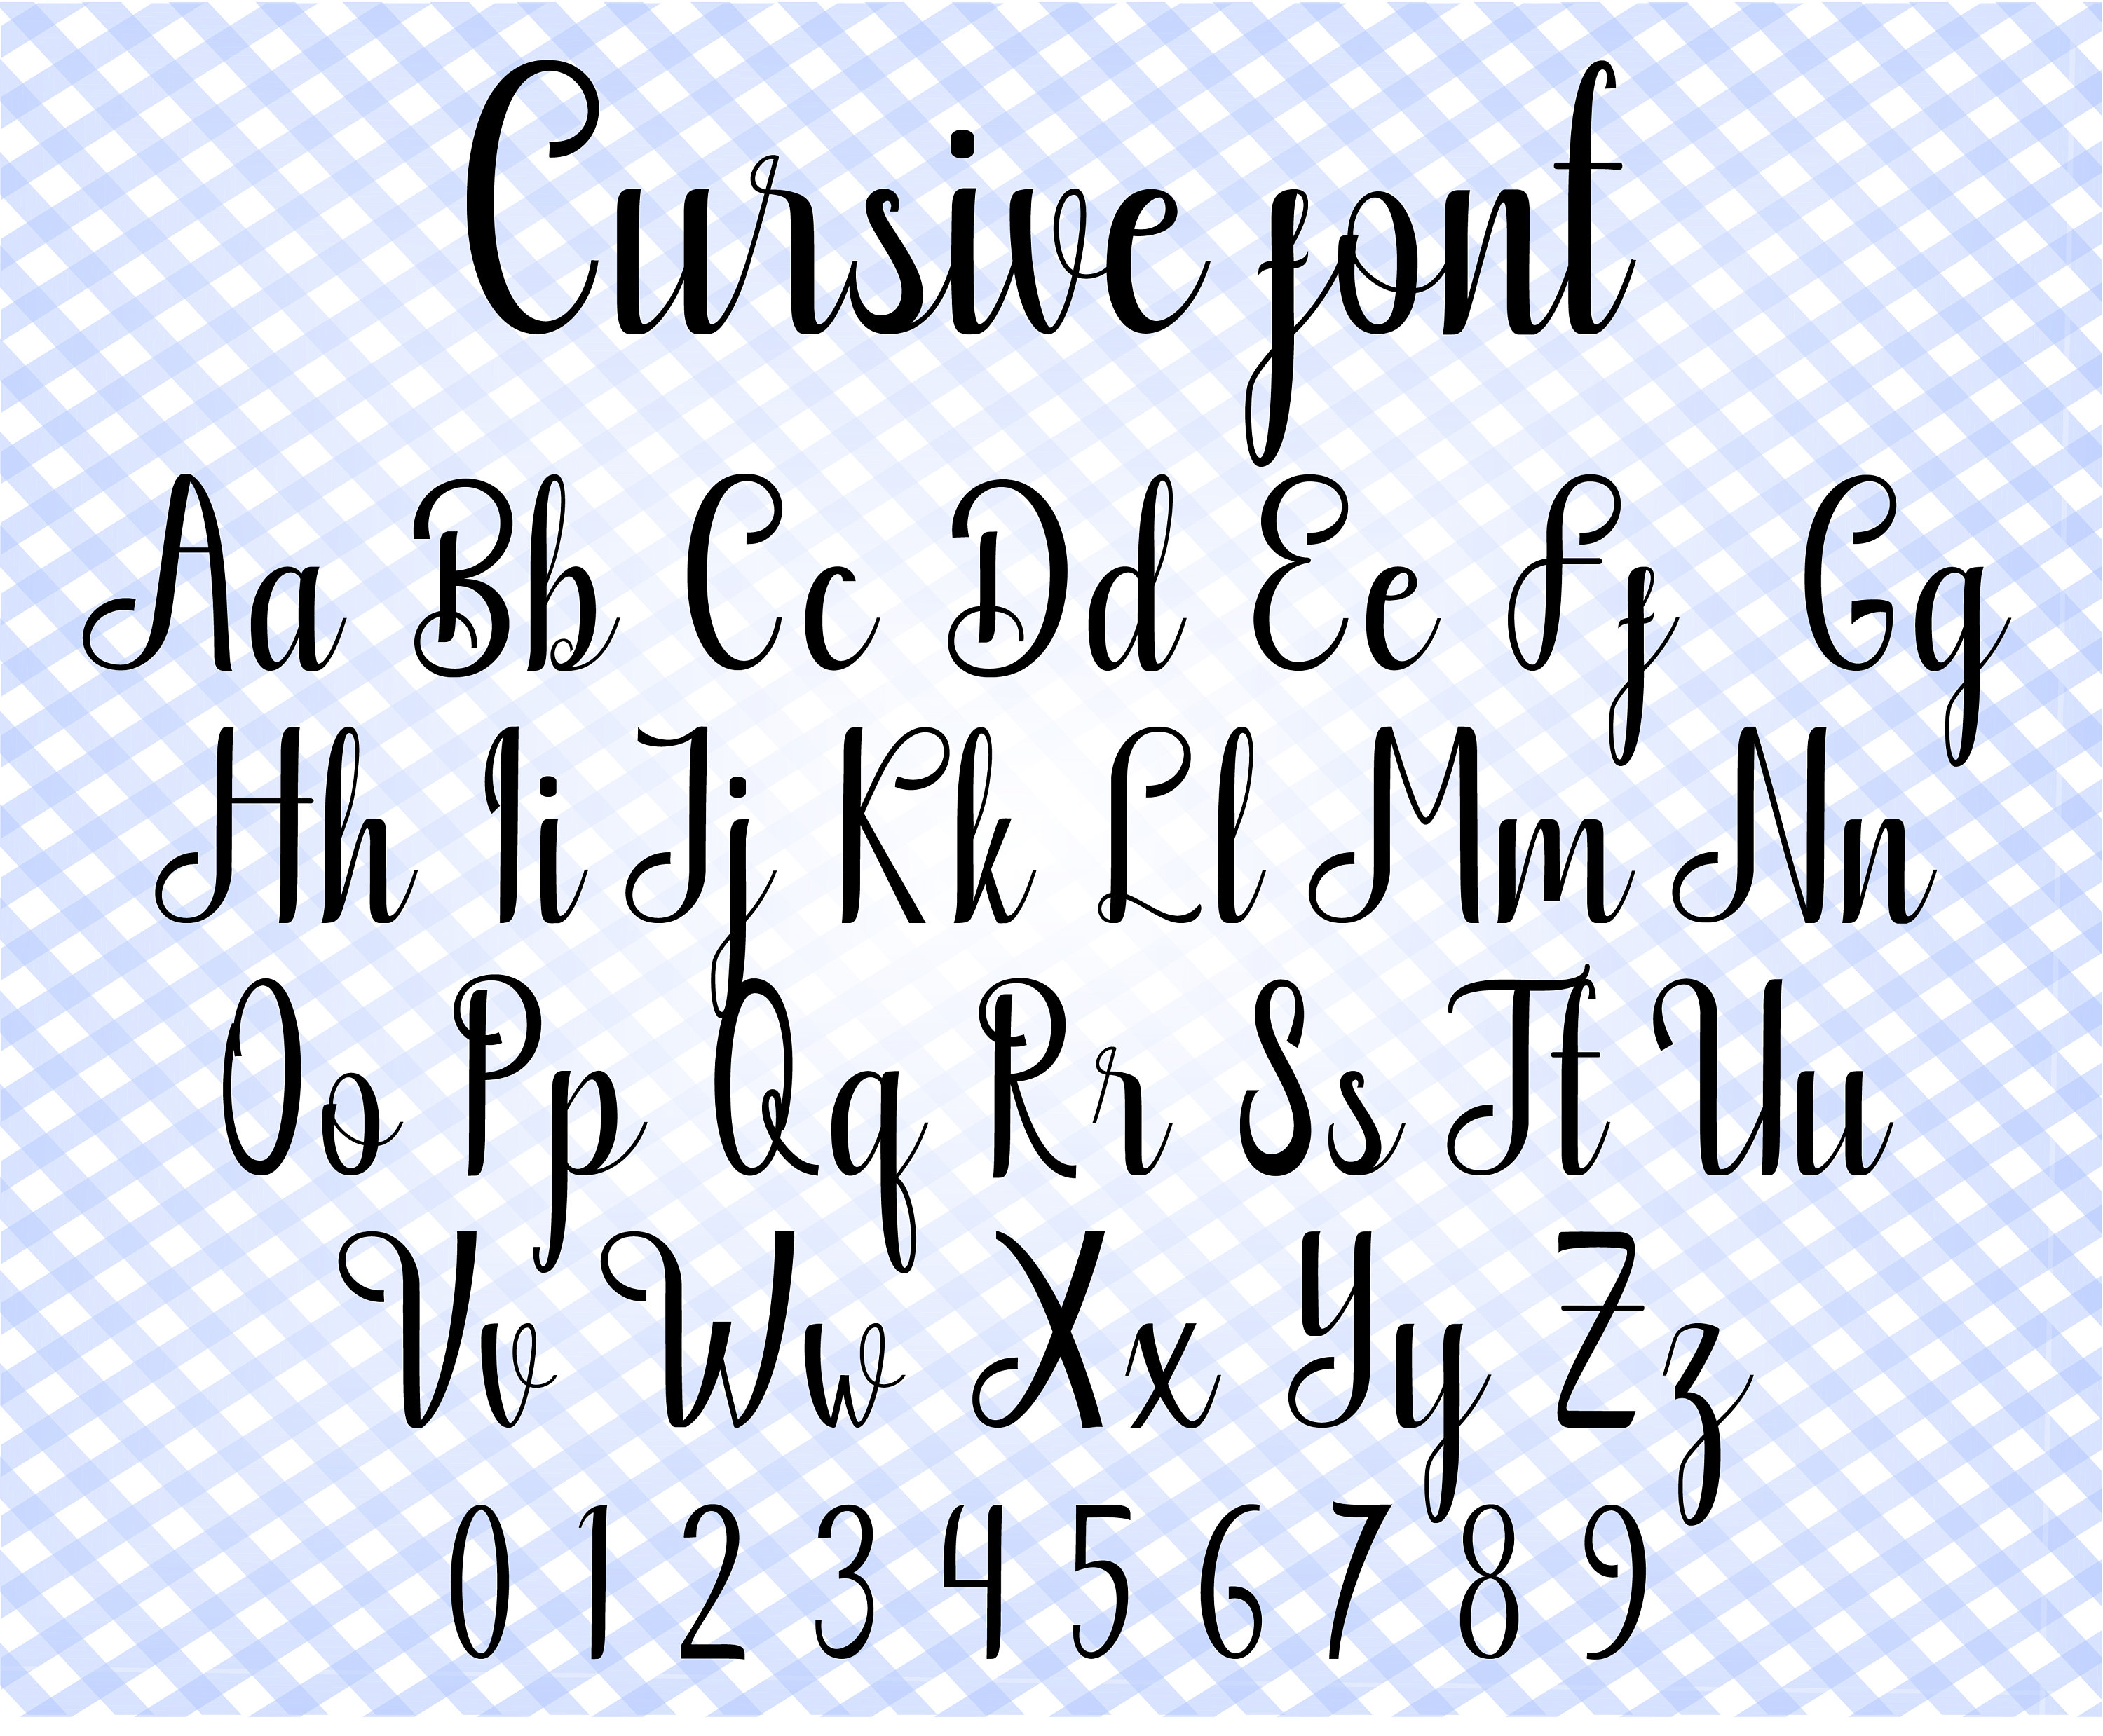 free wedding fonts for cricut